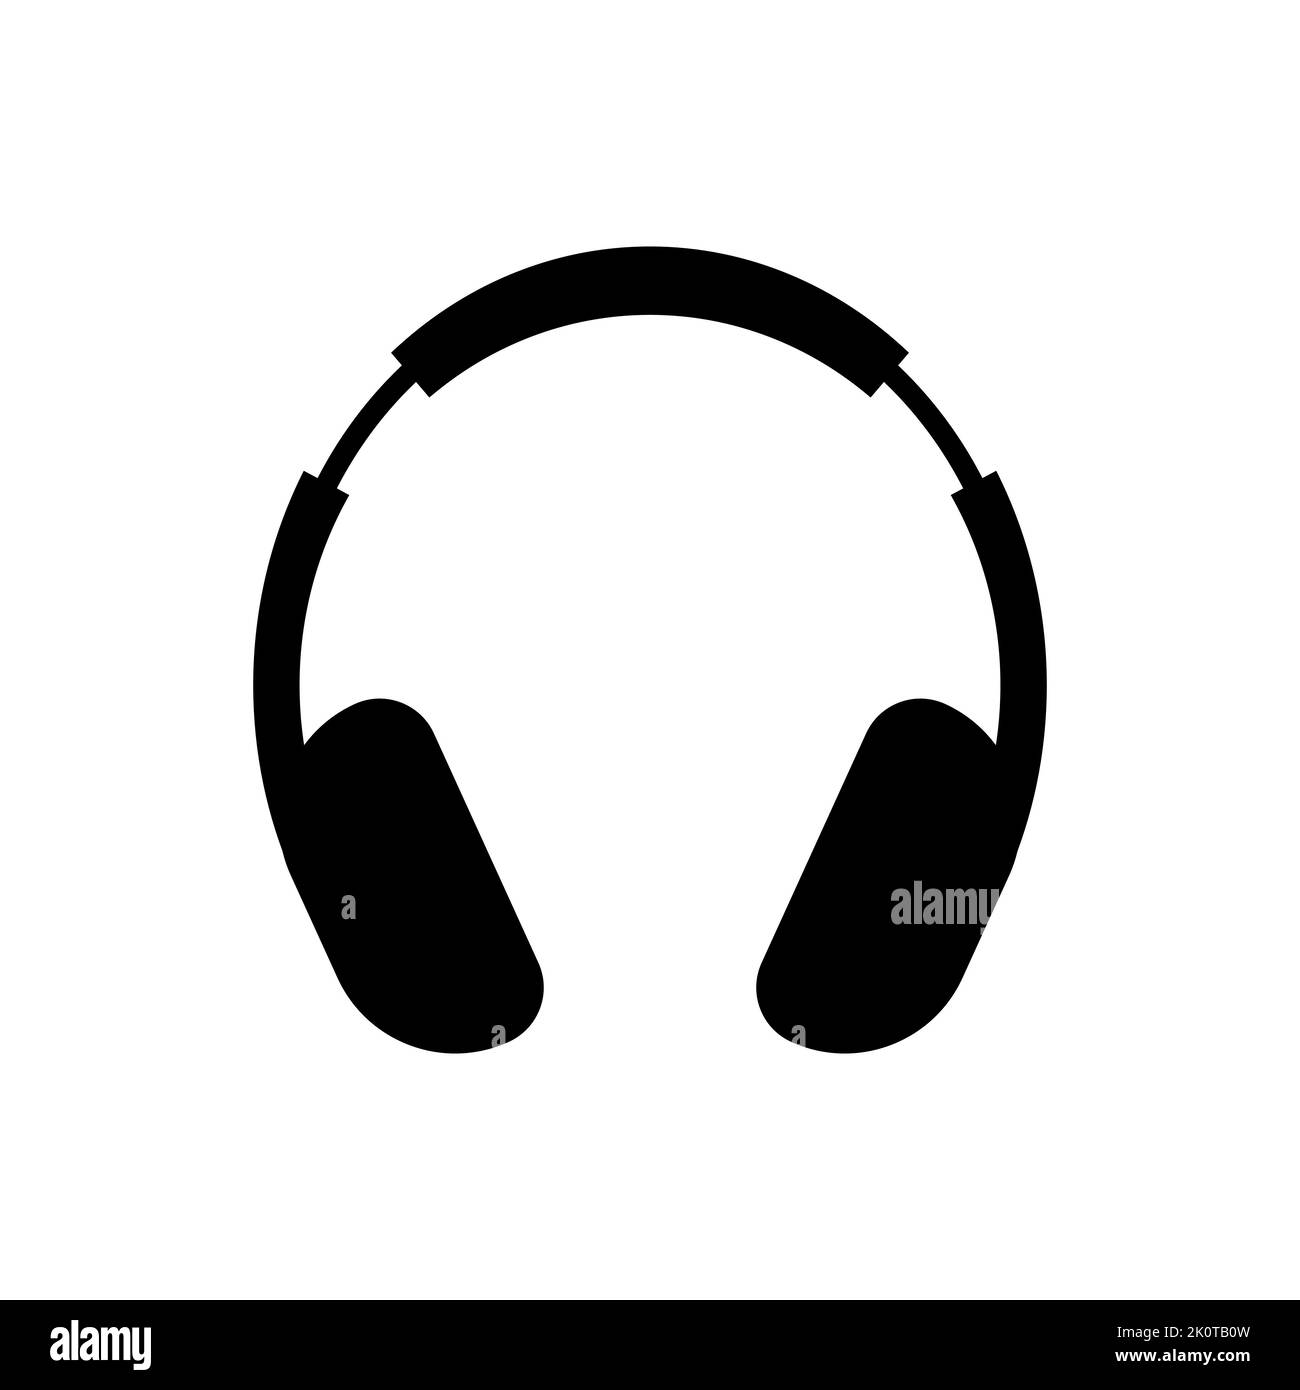 Headphone icon on white background for web design. Vector headphones logo. Stock Vector